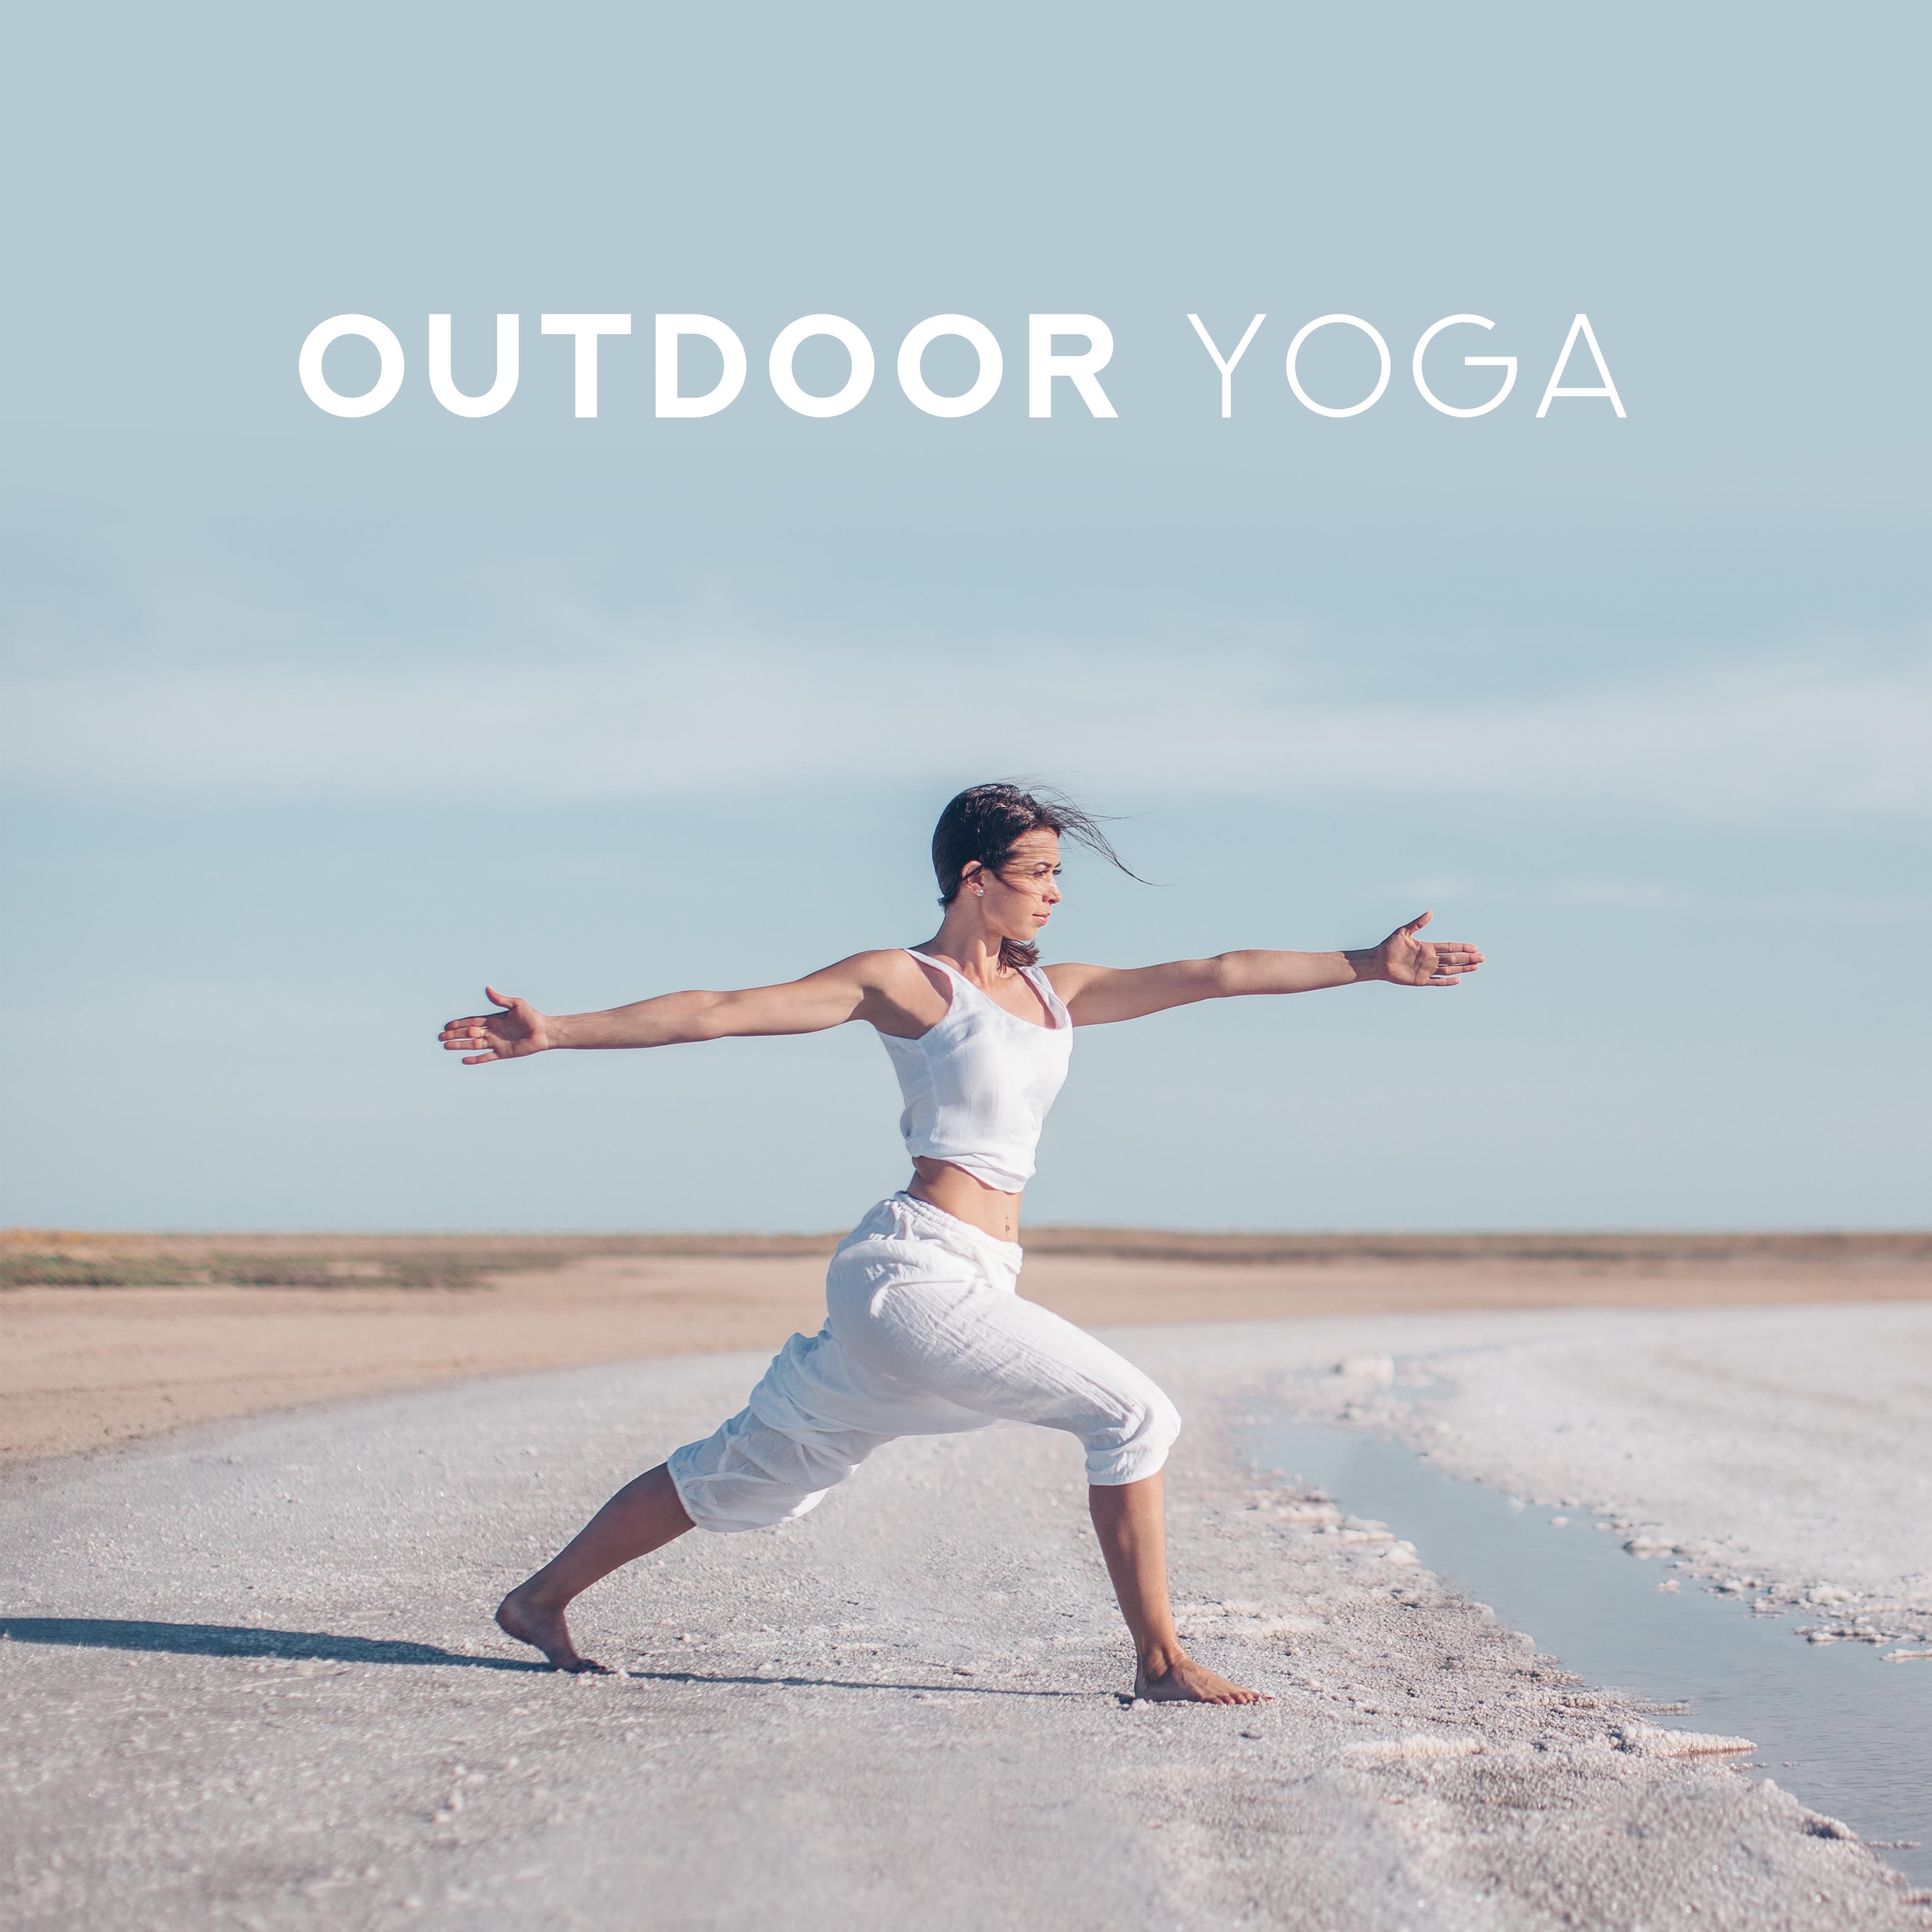 Outdoor Yoga